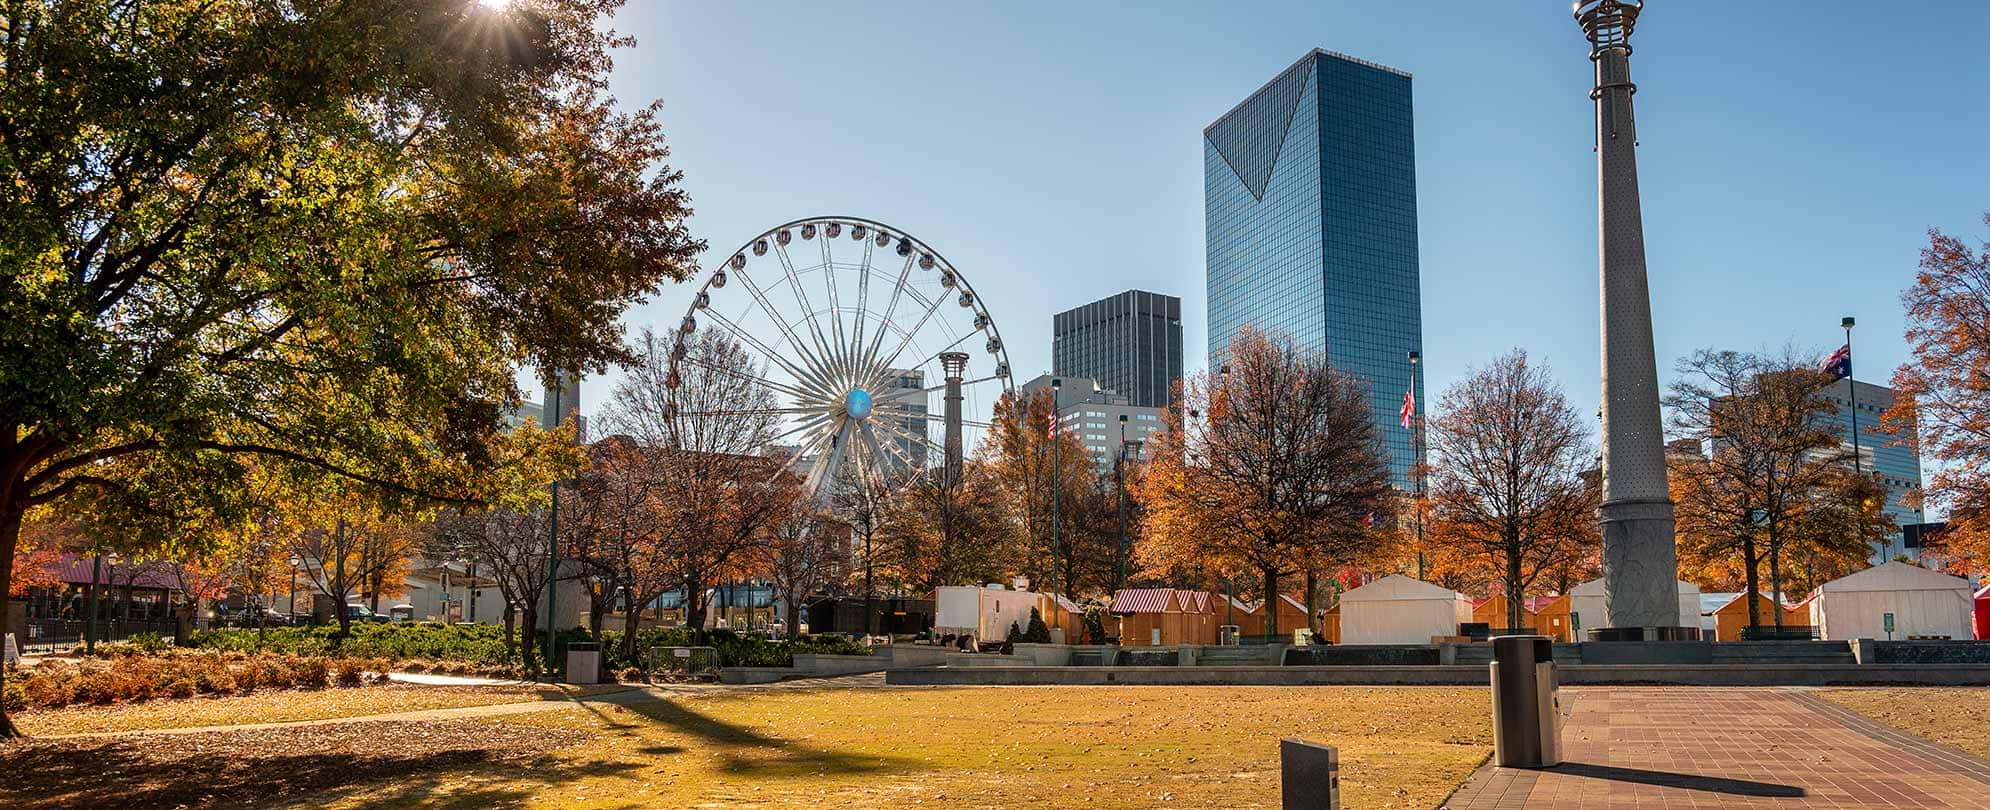 Ferris Wheel and tall buildings at Centennial Olympic Park in Atlanta, Georgia.